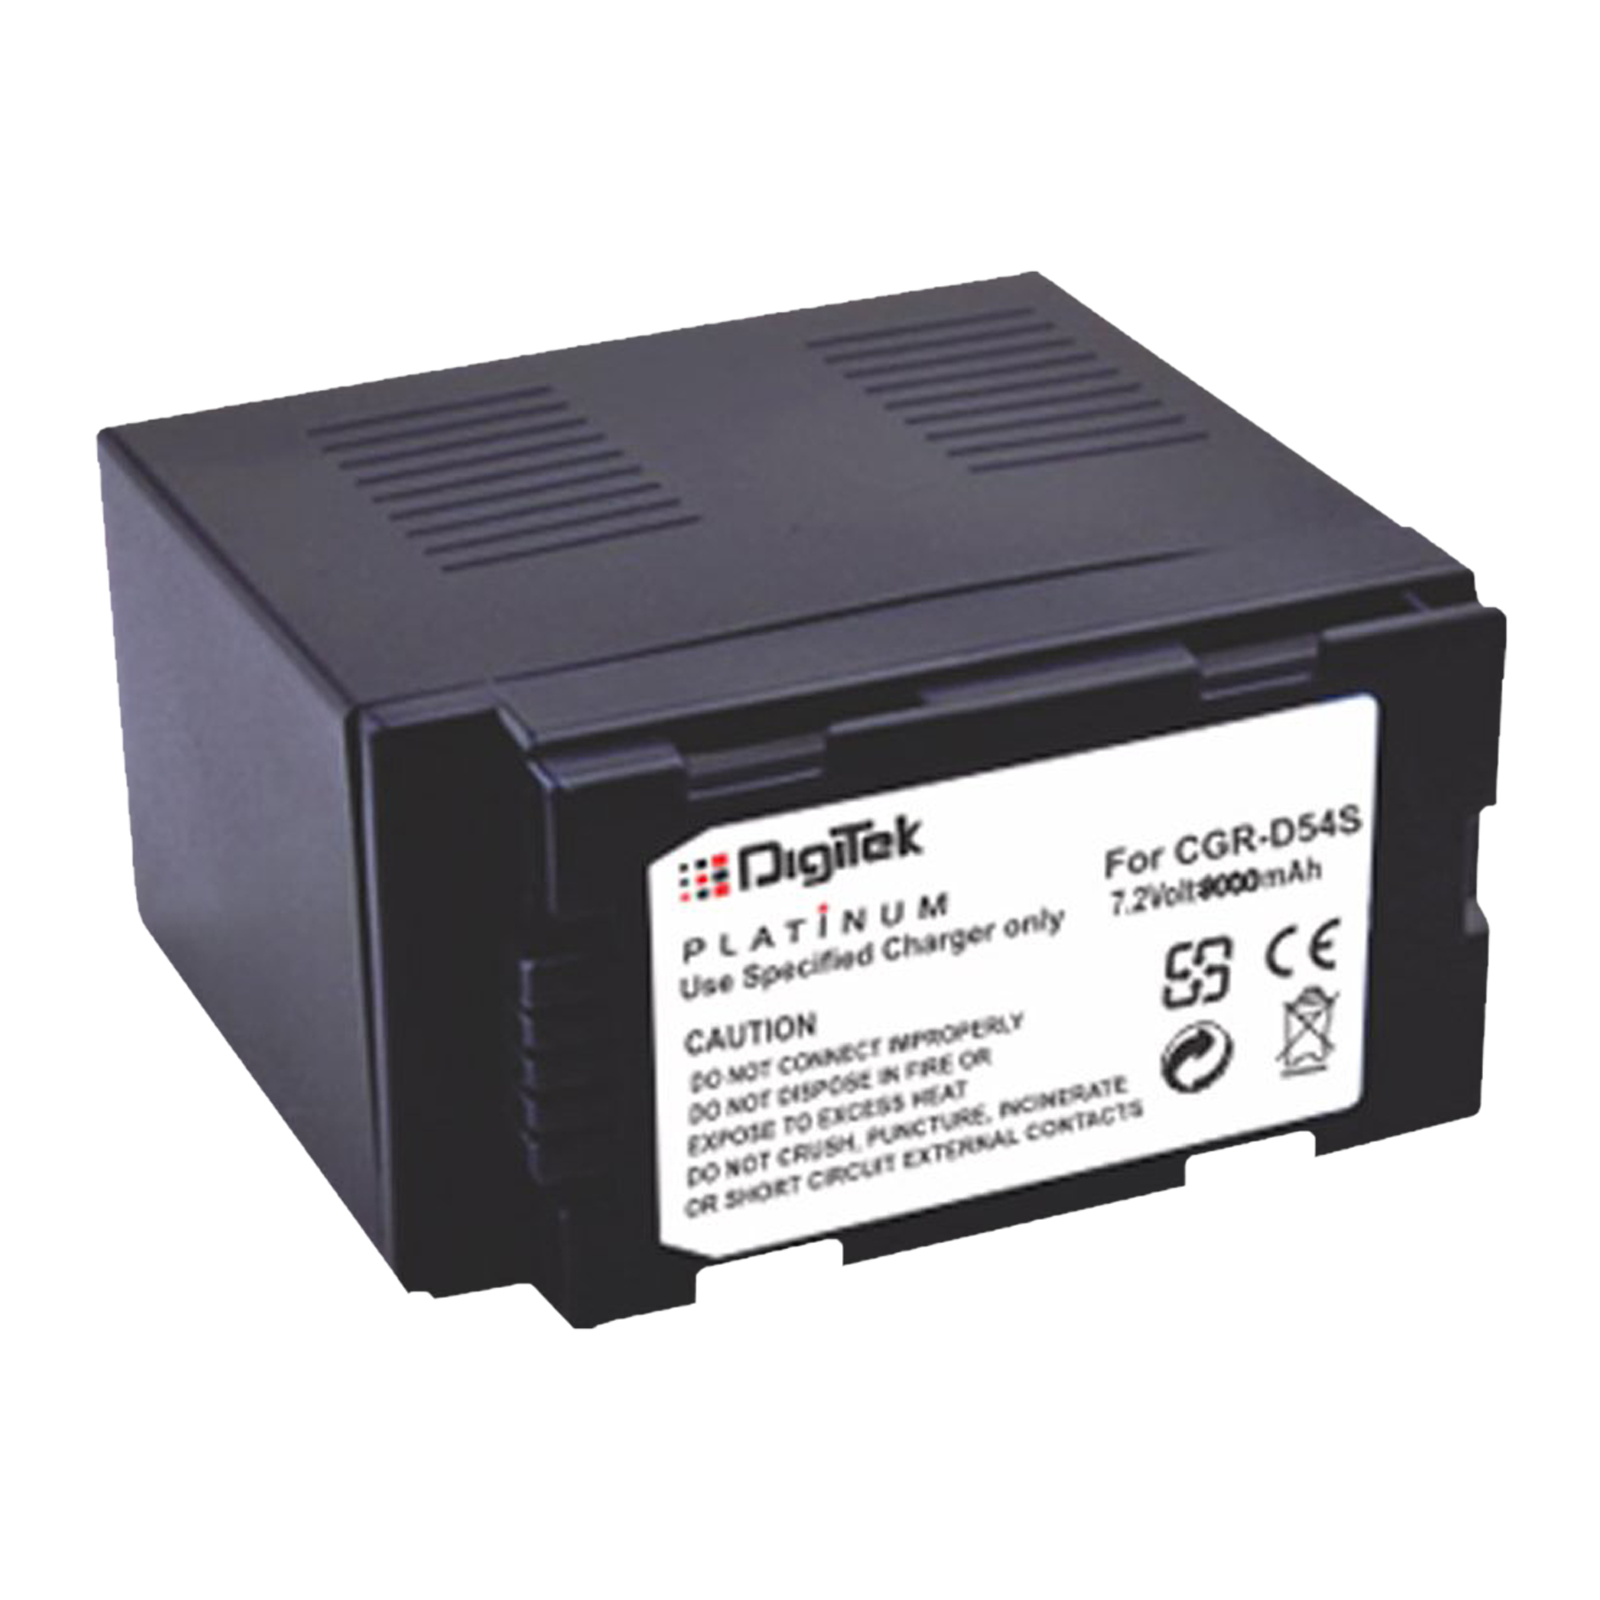 DigiTek D-54S Platinum 9000 mAh Li-ion Rechargeable Battery for AG-DVC7, AG-DVC15, AG-DVC30, AG-DVX100A, MX300 and MX500